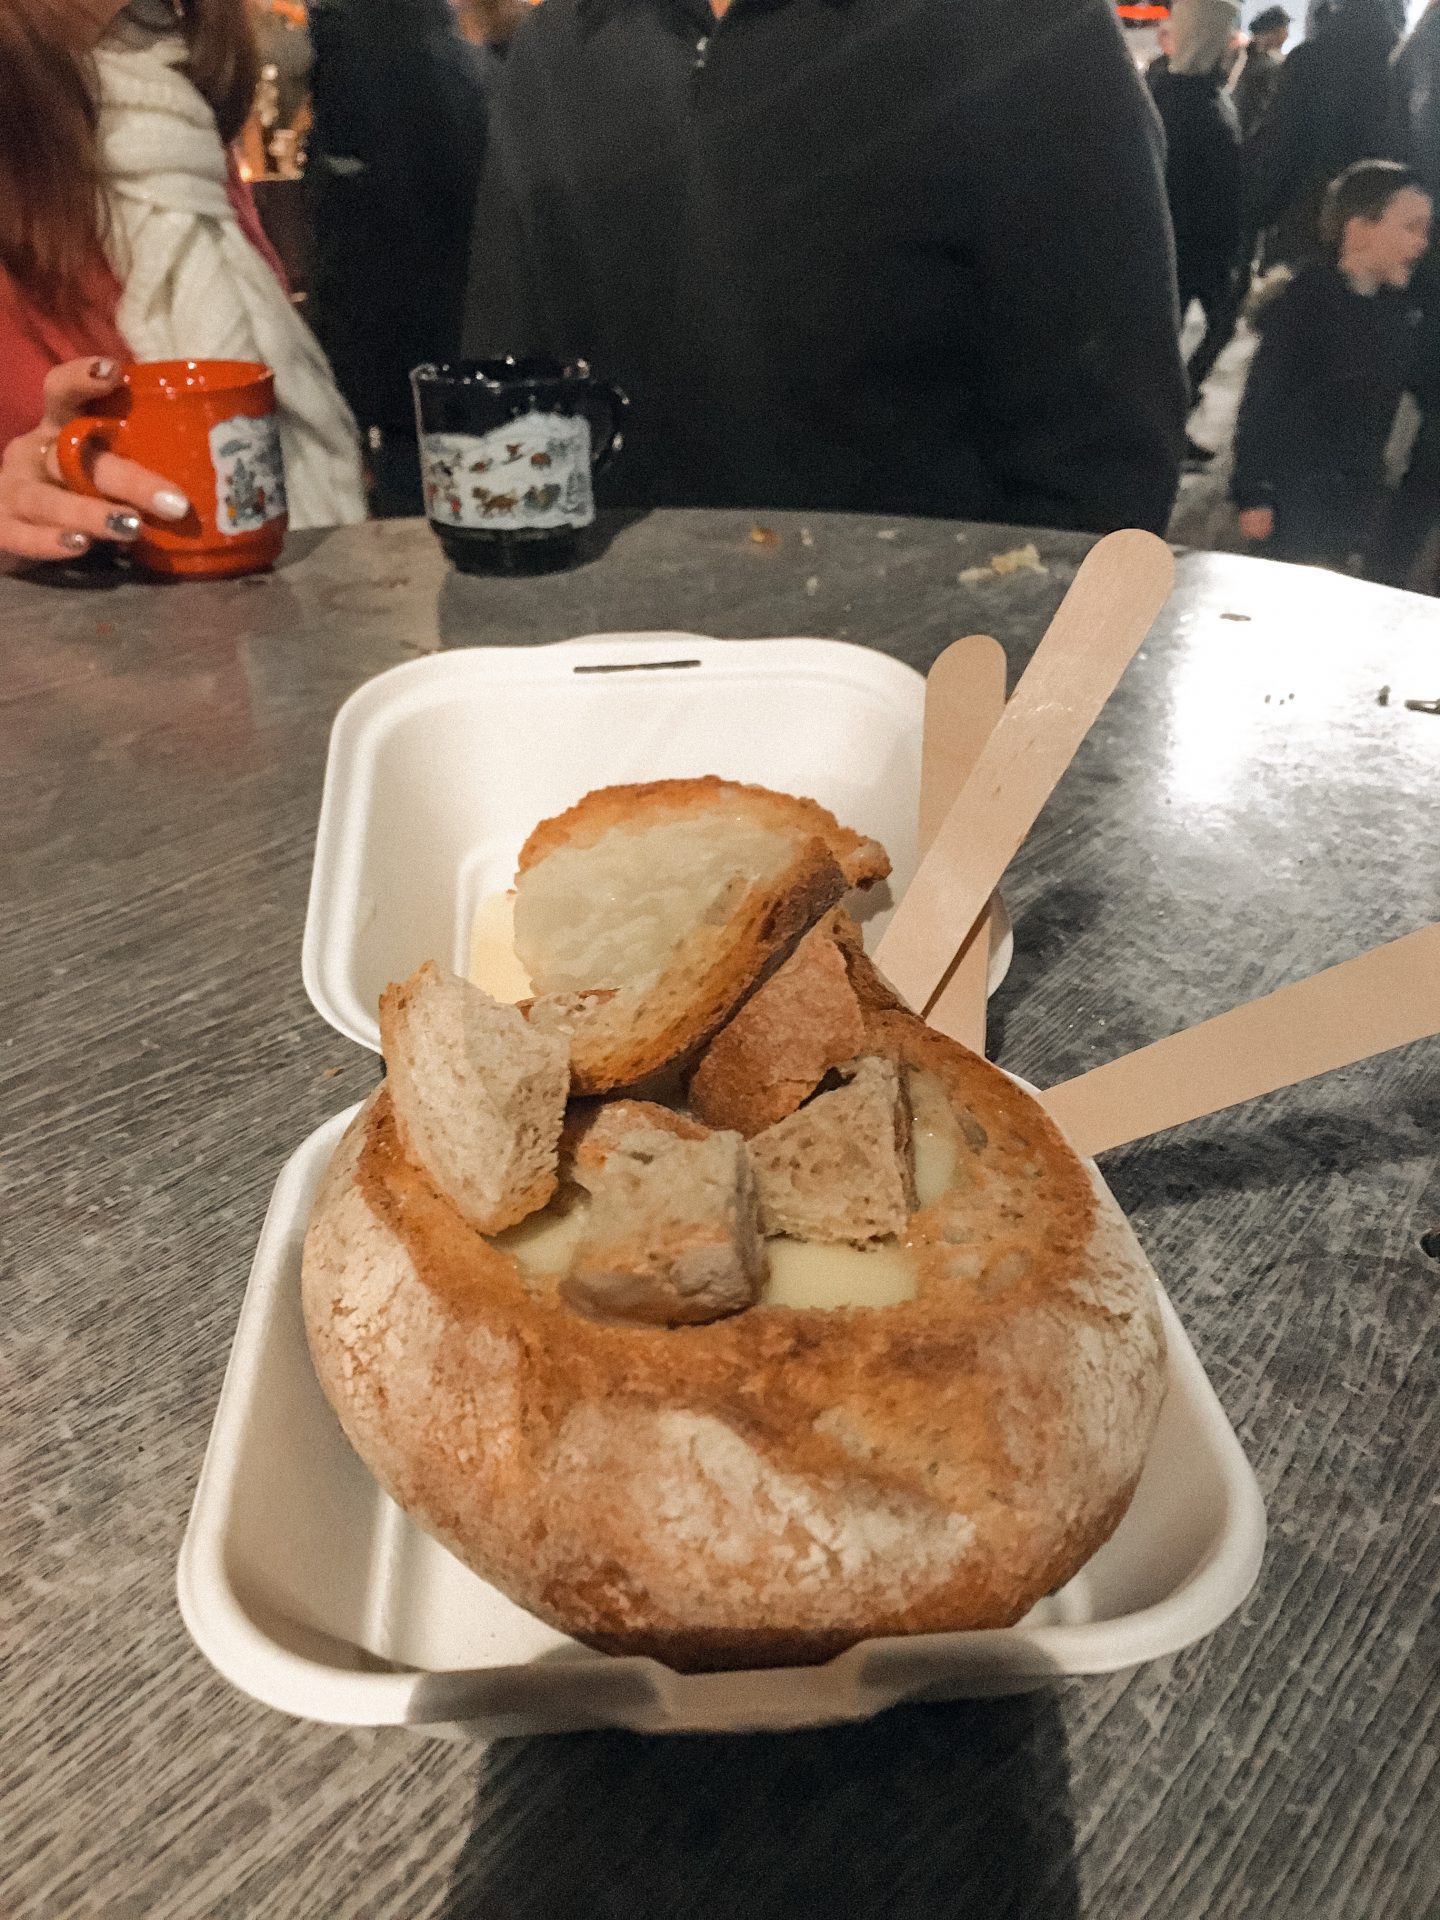 Cheese in a bread bowl - food as Edinburgh Christmas market